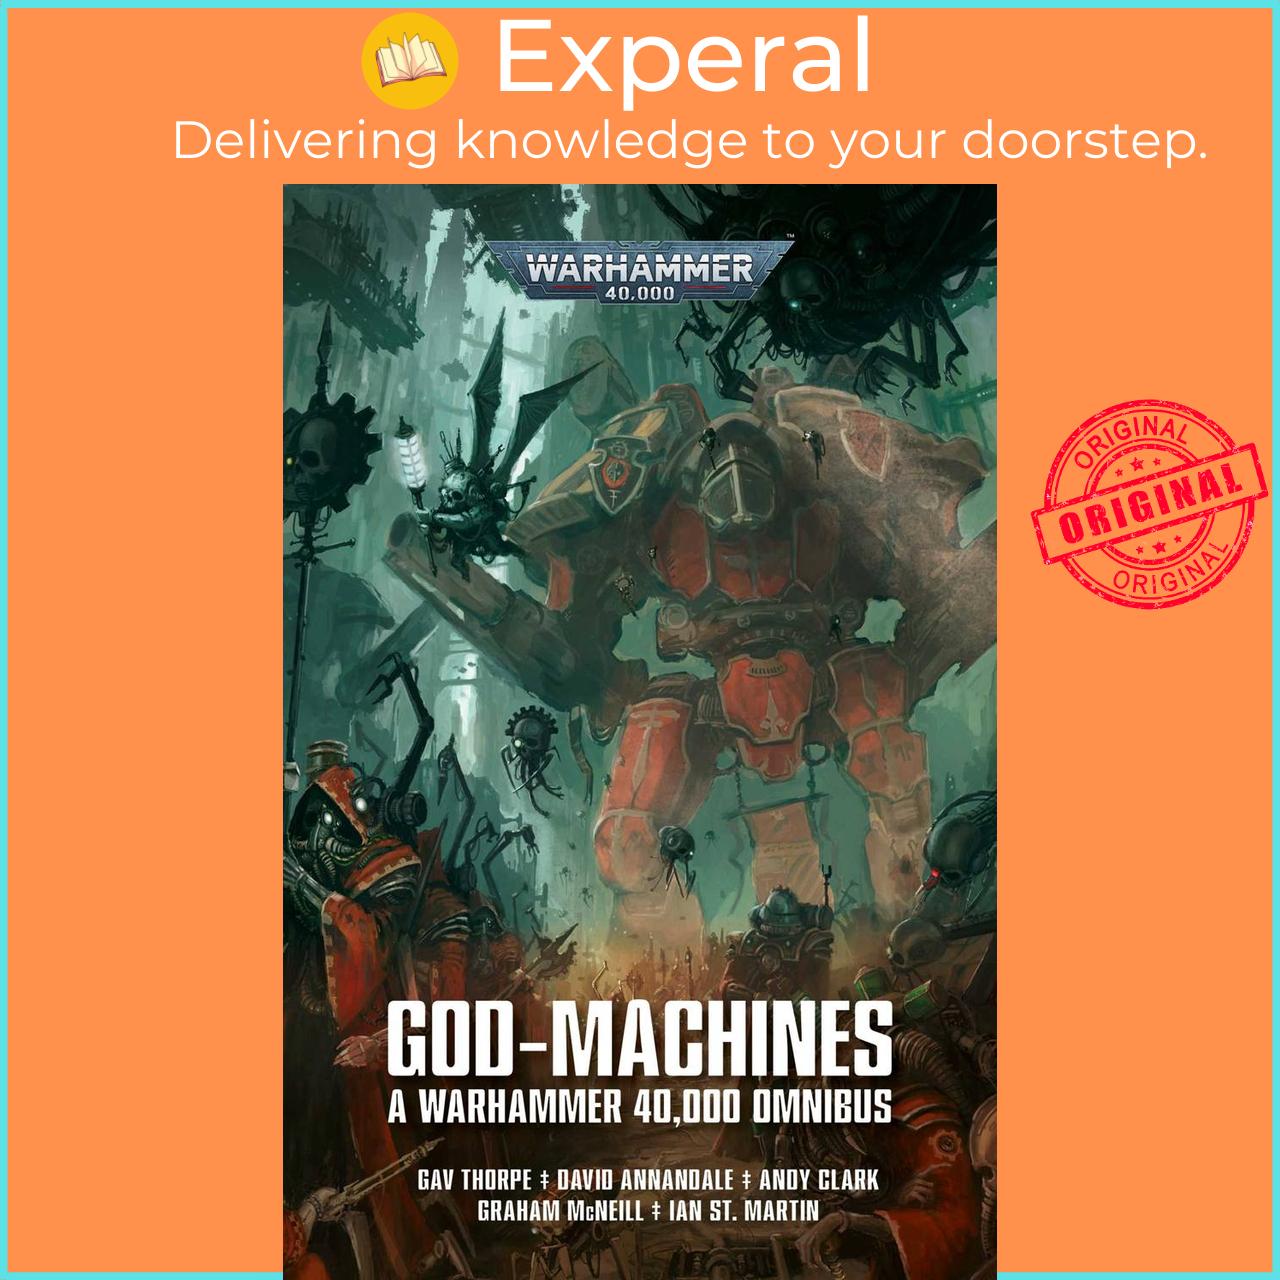 Sách - God-Machines by David Annandale (UK edition, paperback)